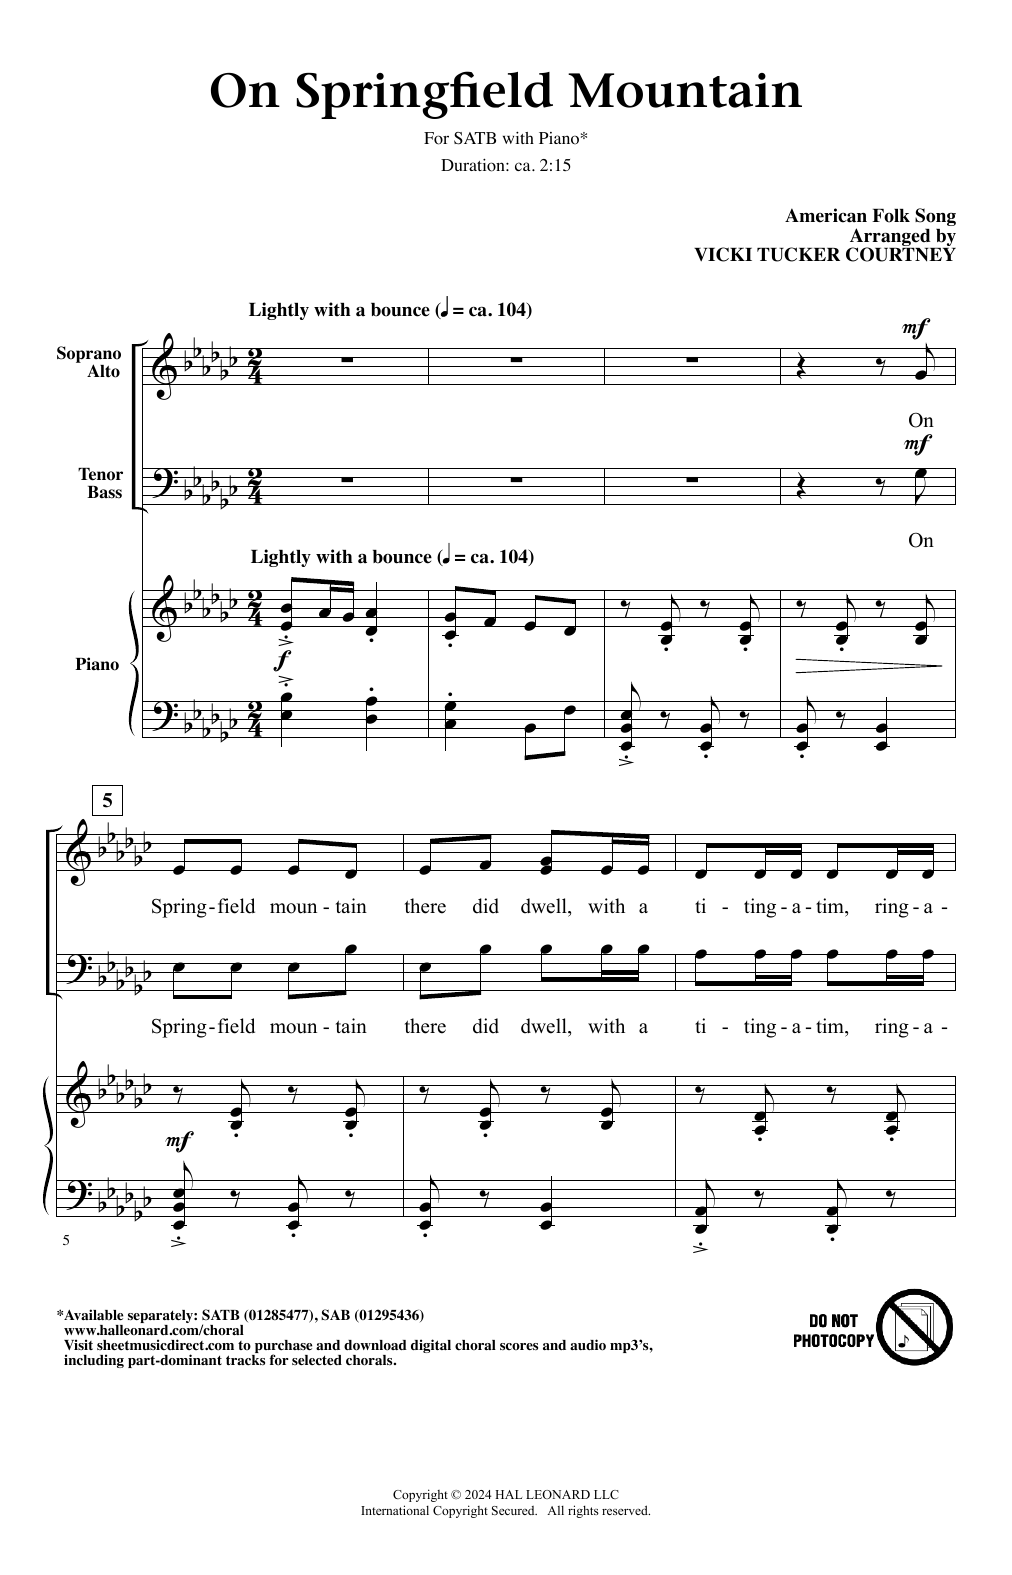 American Folk Song On Springfield Mountain (arr. Vicki Tucker Courtney) sheet music notes and chords arranged for SAB Choir